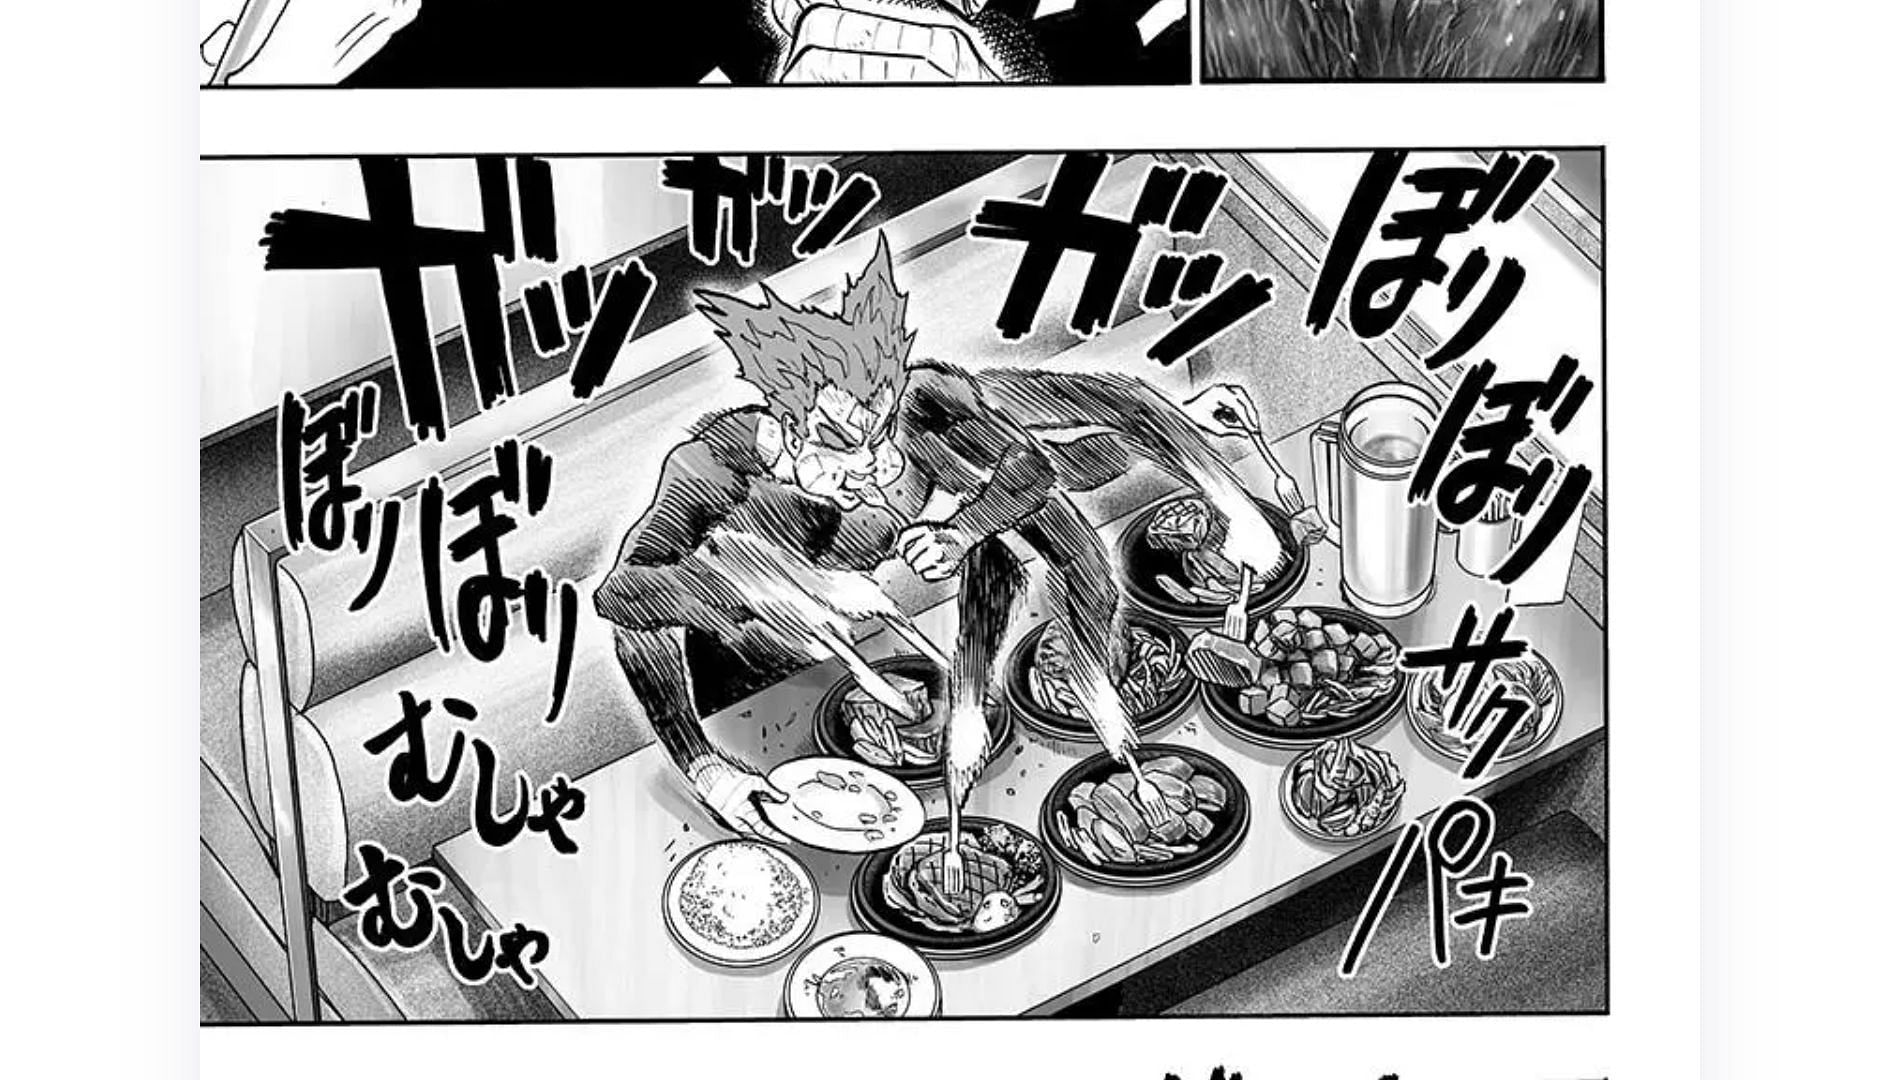 Dine and dash incident (Image via Murata/Shuesha)